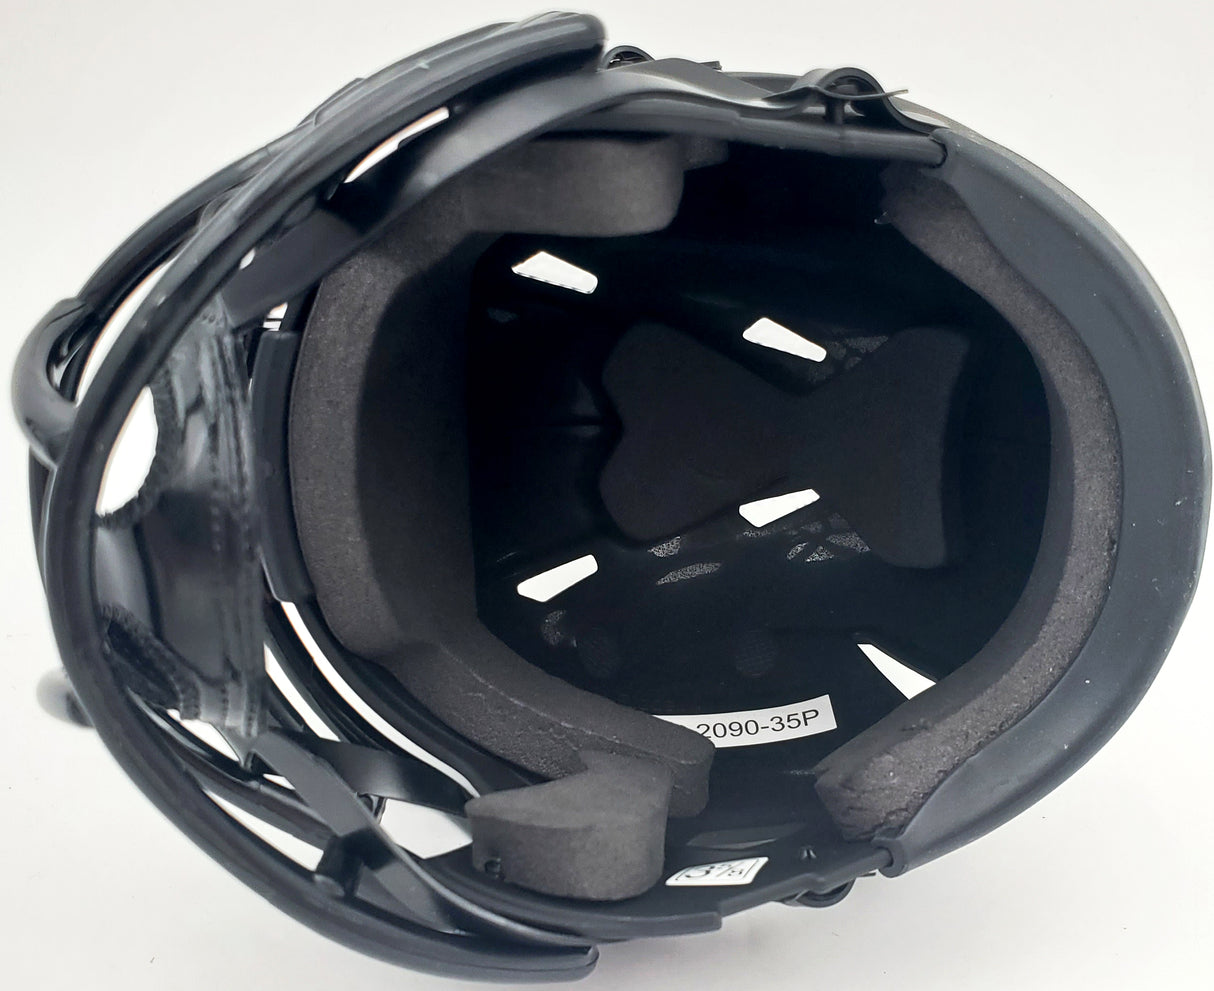 LaDainian Tomlinson Autographed New York Jets Eclipse Black Mini Helmet "HOF 17" Beckett BAS Stock #185790